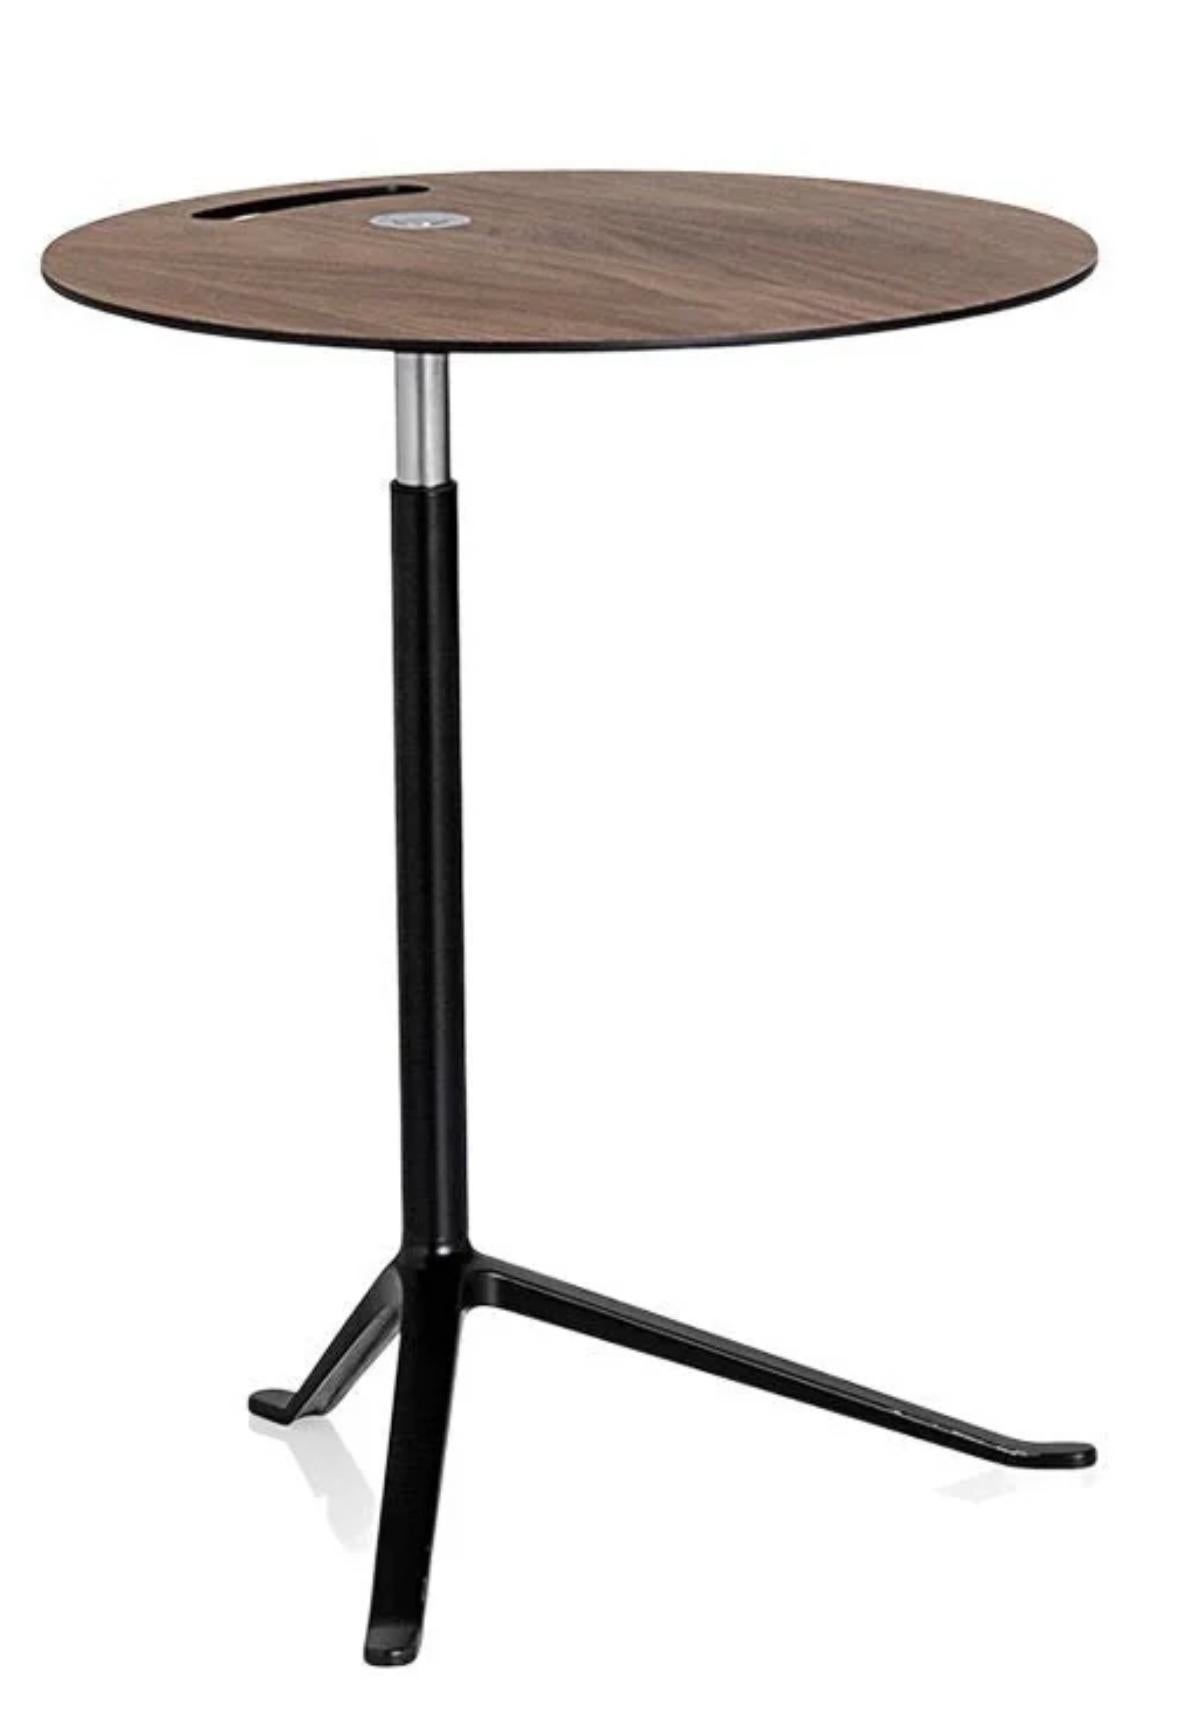 Little Friend KS11 Height-Adjustable Table, Fritz Hansen, Walnut, Denmark. For Sale